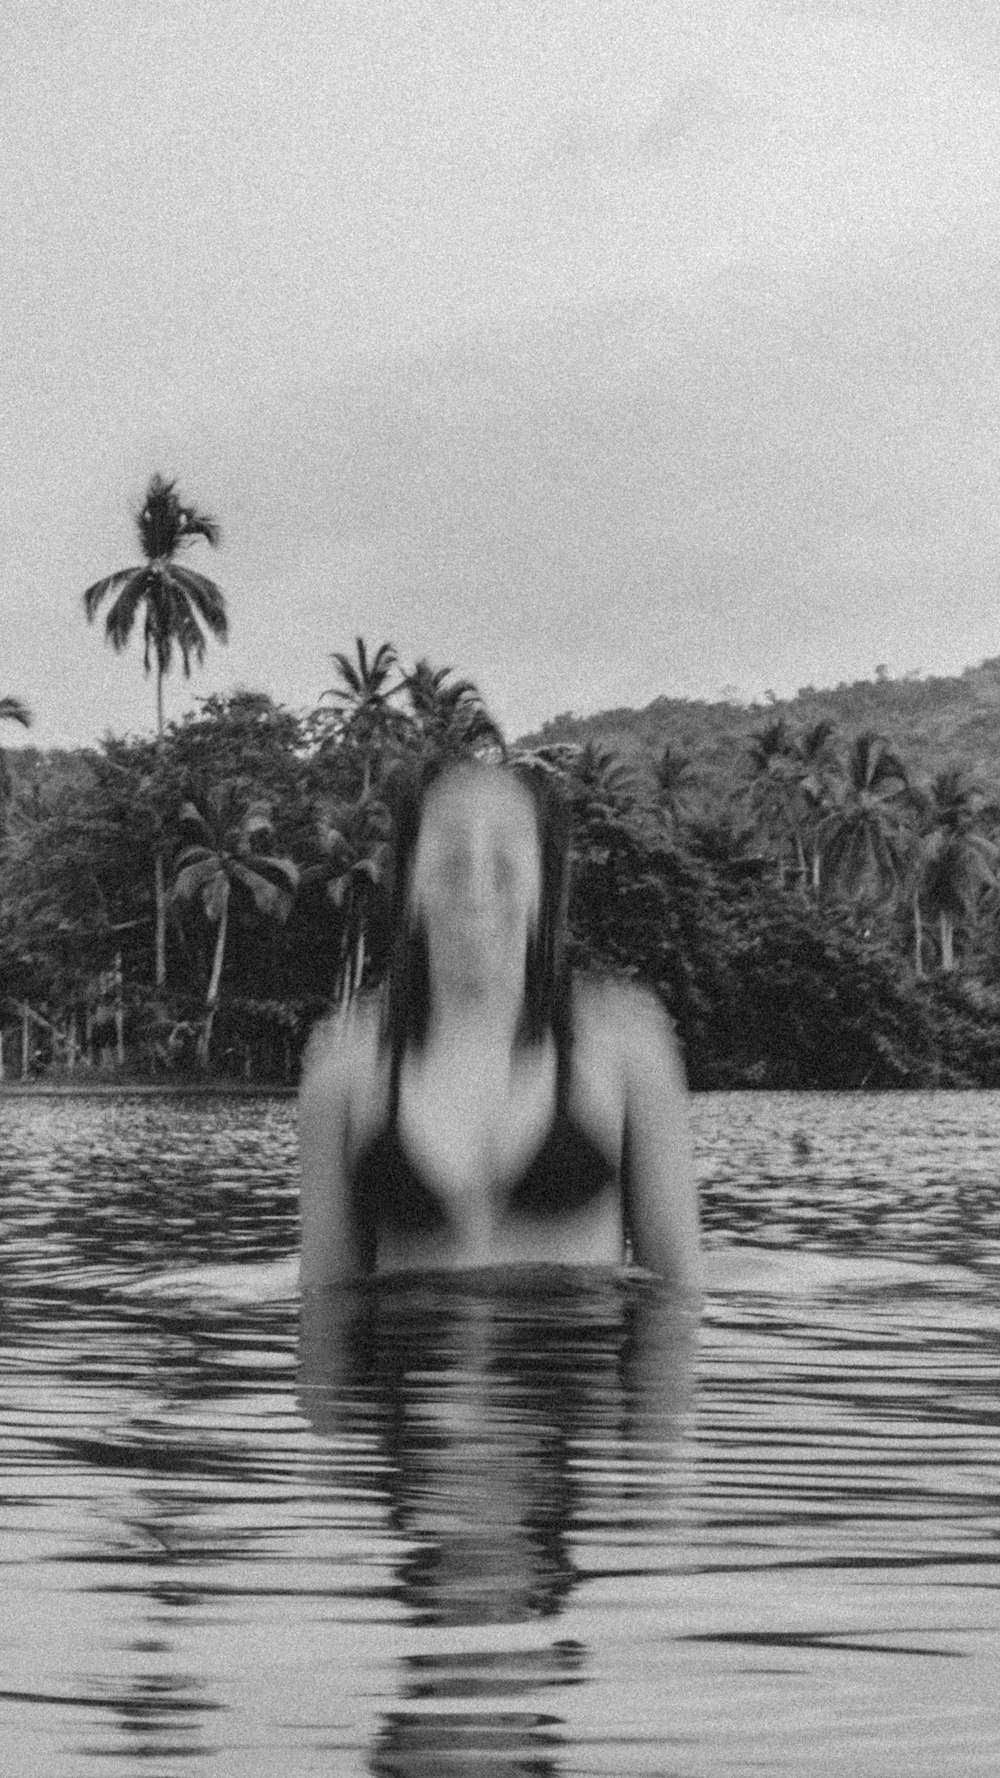 a woman in a bikini floating in a body of water